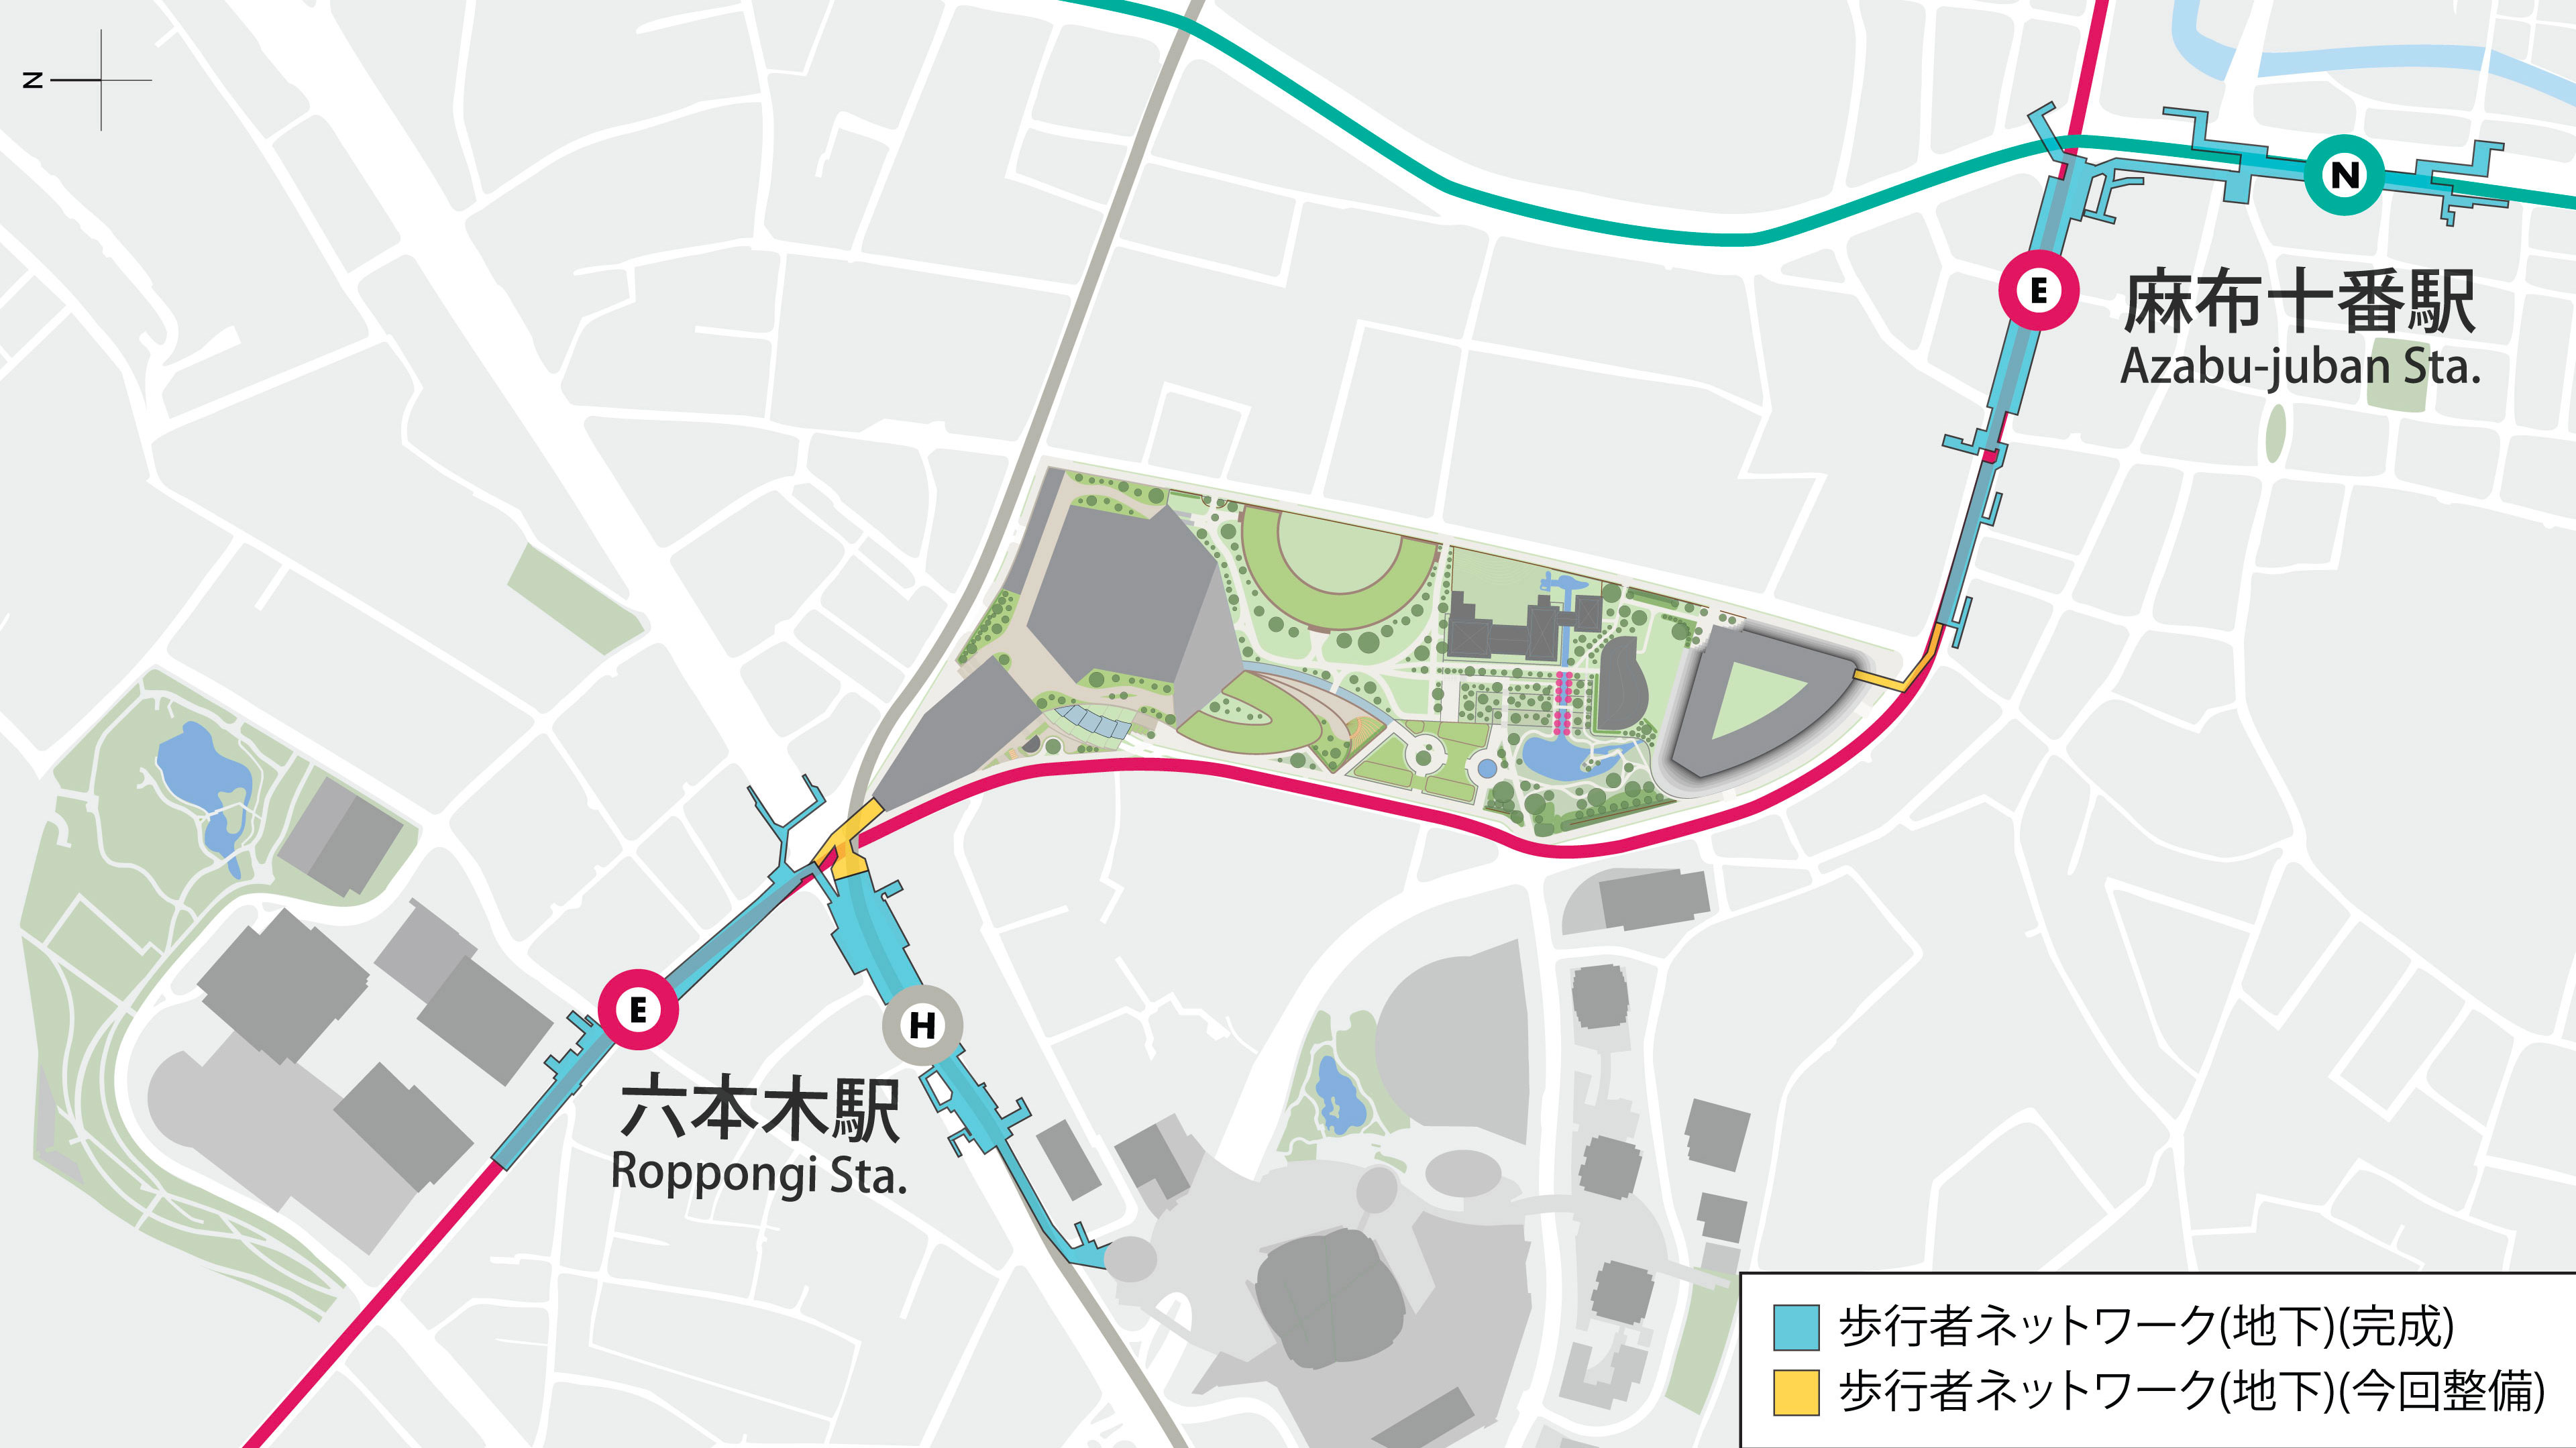 Izaka Hills would connect to two neighboring subway stations through underground pedestrian passageways.